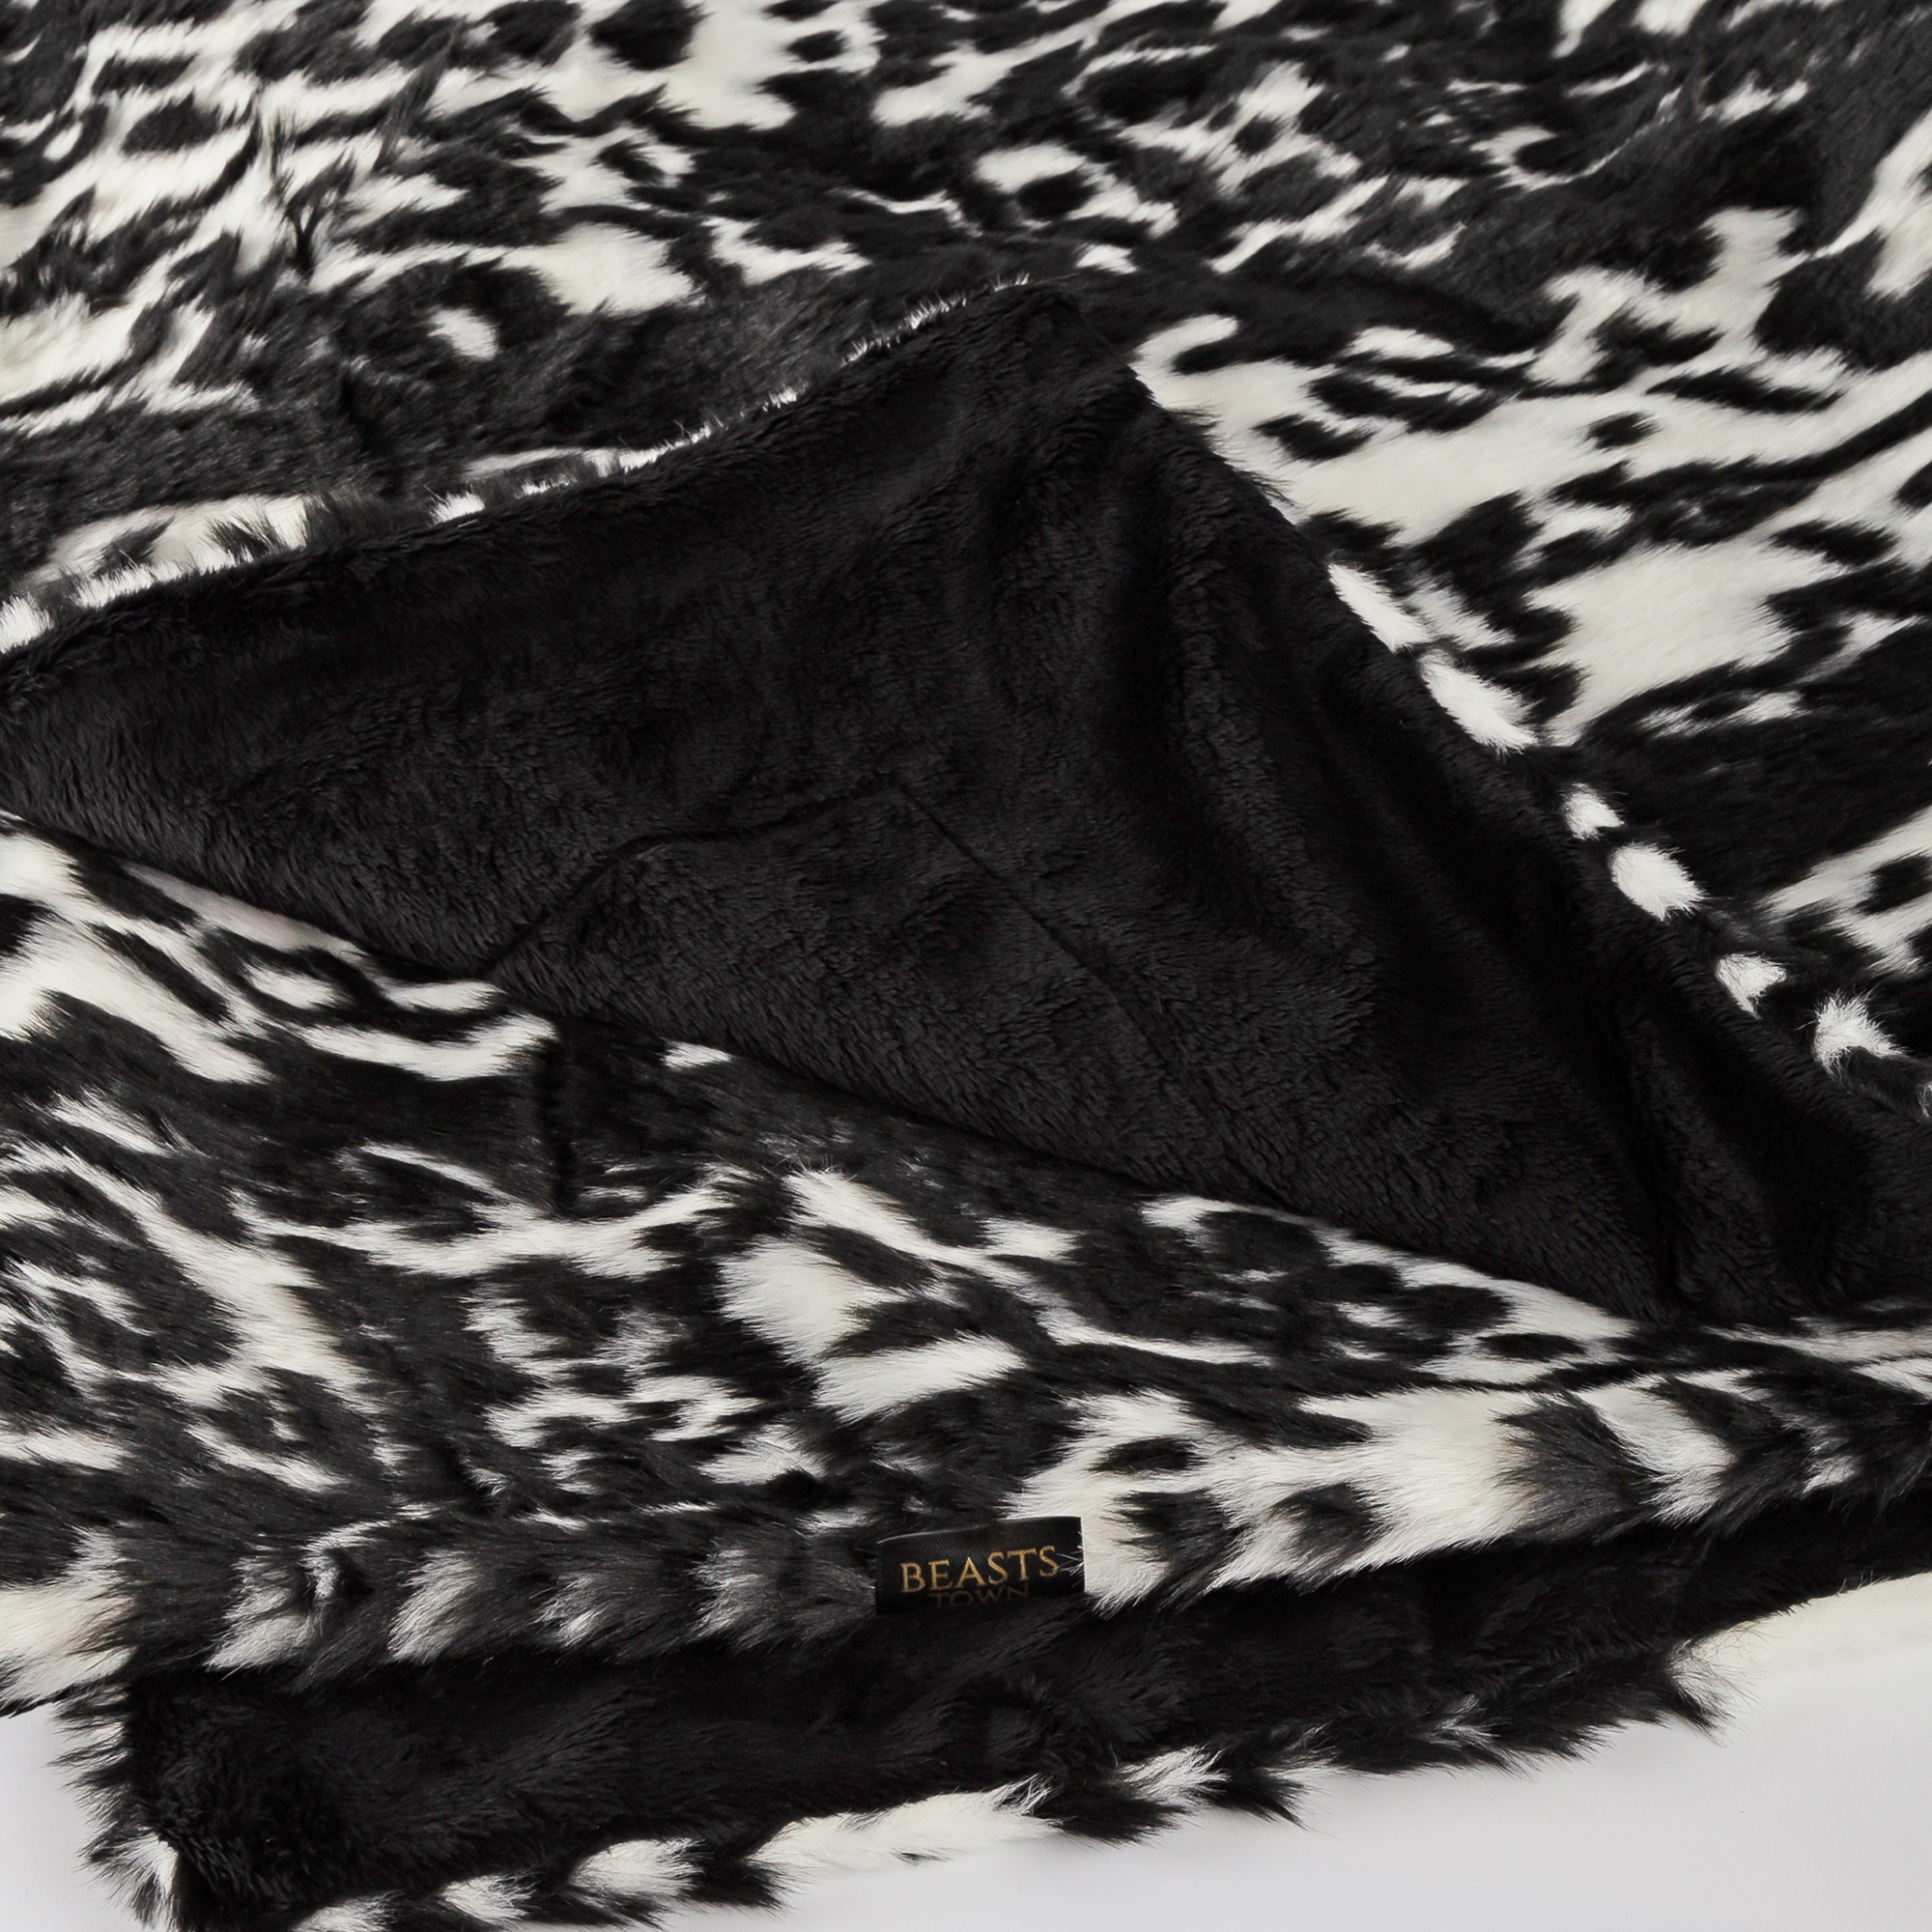 Design plush throw blanket black/white, velour backing